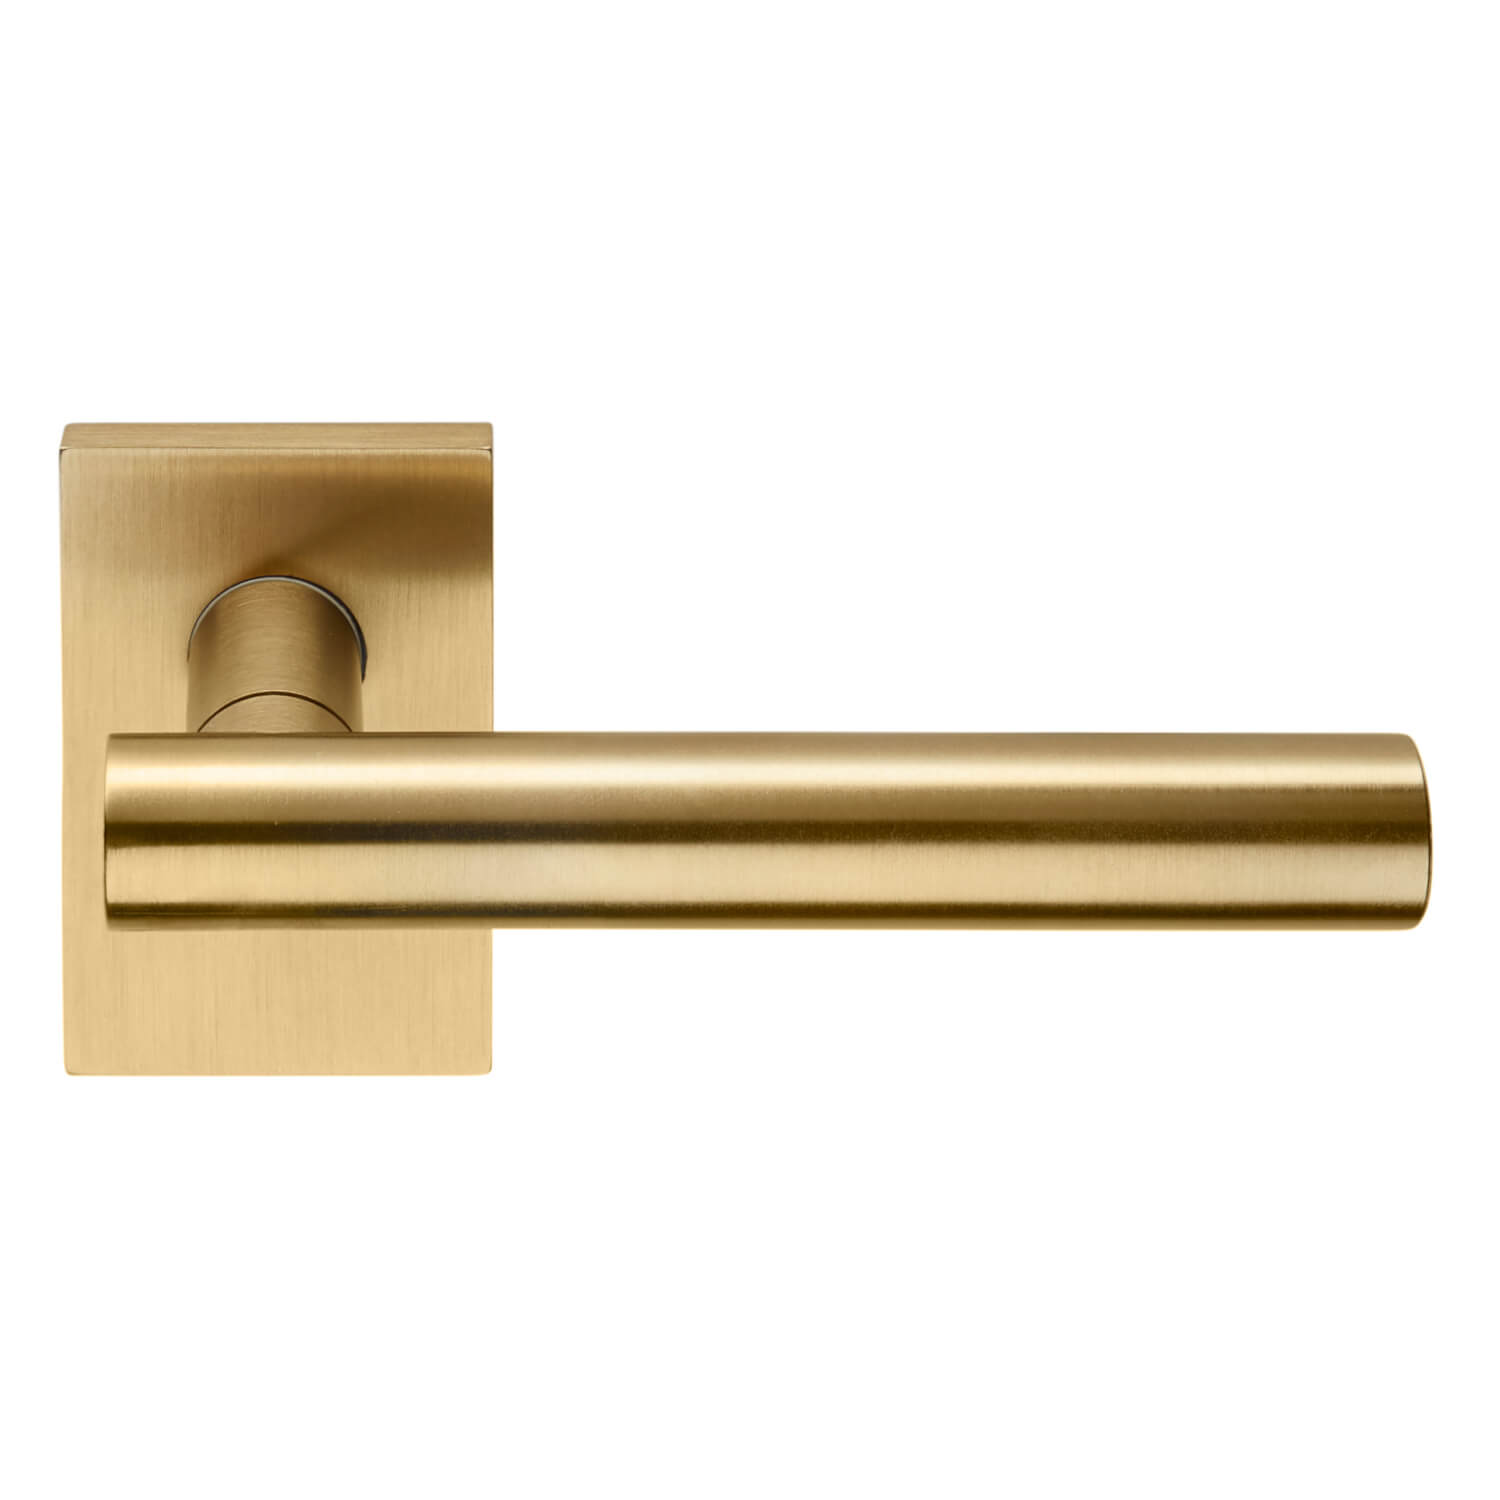 DND Türgriff - Antikes Satin Gold - Design von 967arch - Modell BLEND - DND  Türgriffe - Model BLEND - VillaHus